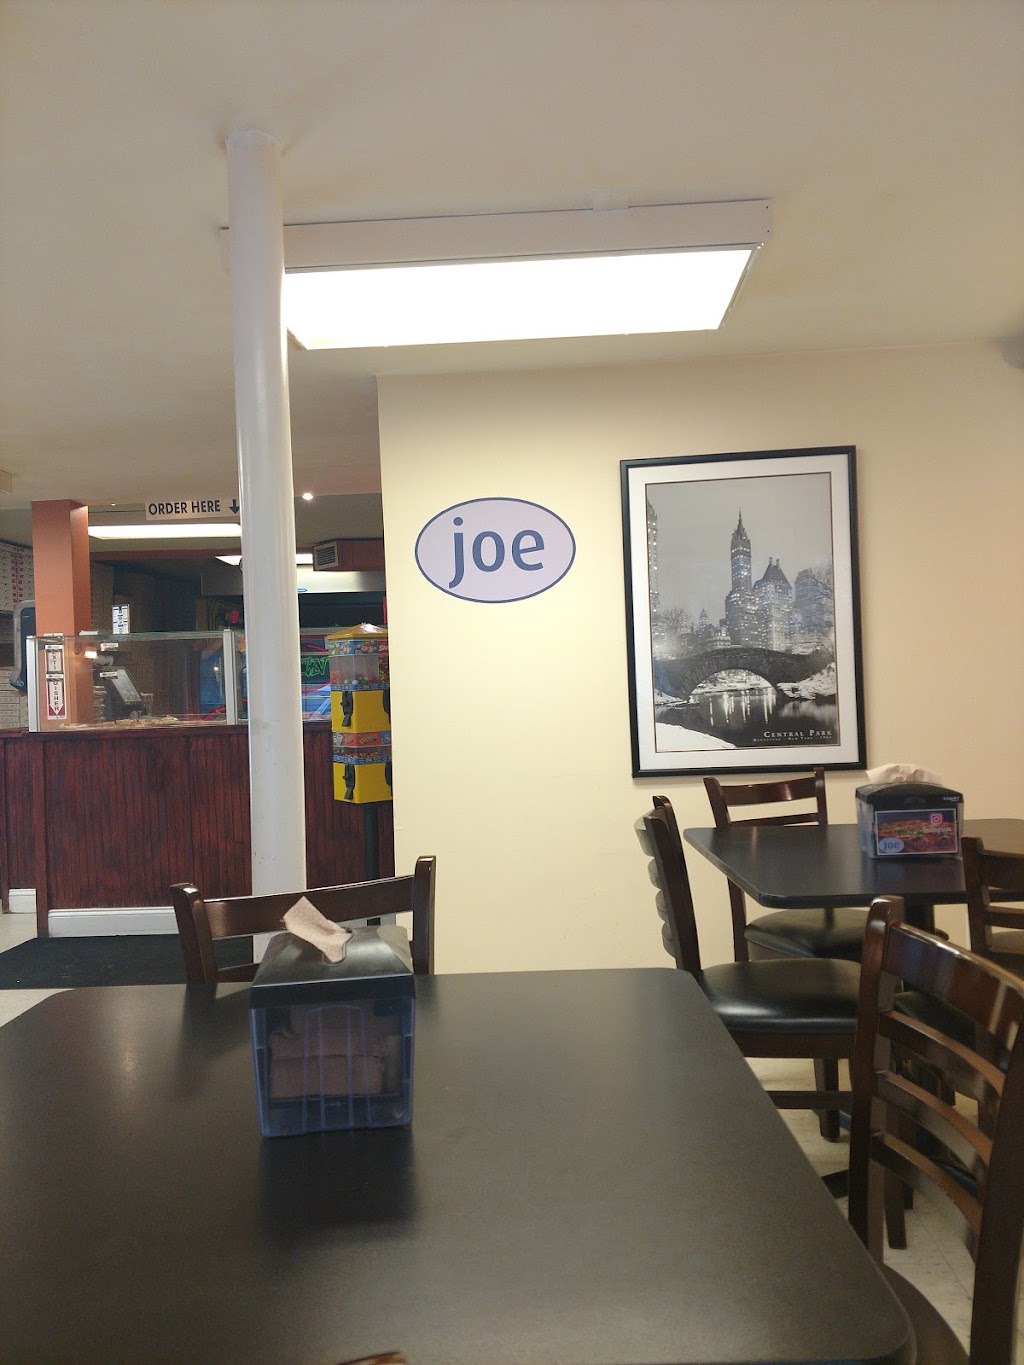 Joe Cristianos Pizza | 518 Salt Point Turnpike, Poughkeepsie, NY 12601 | Phone: (845) 454-4020